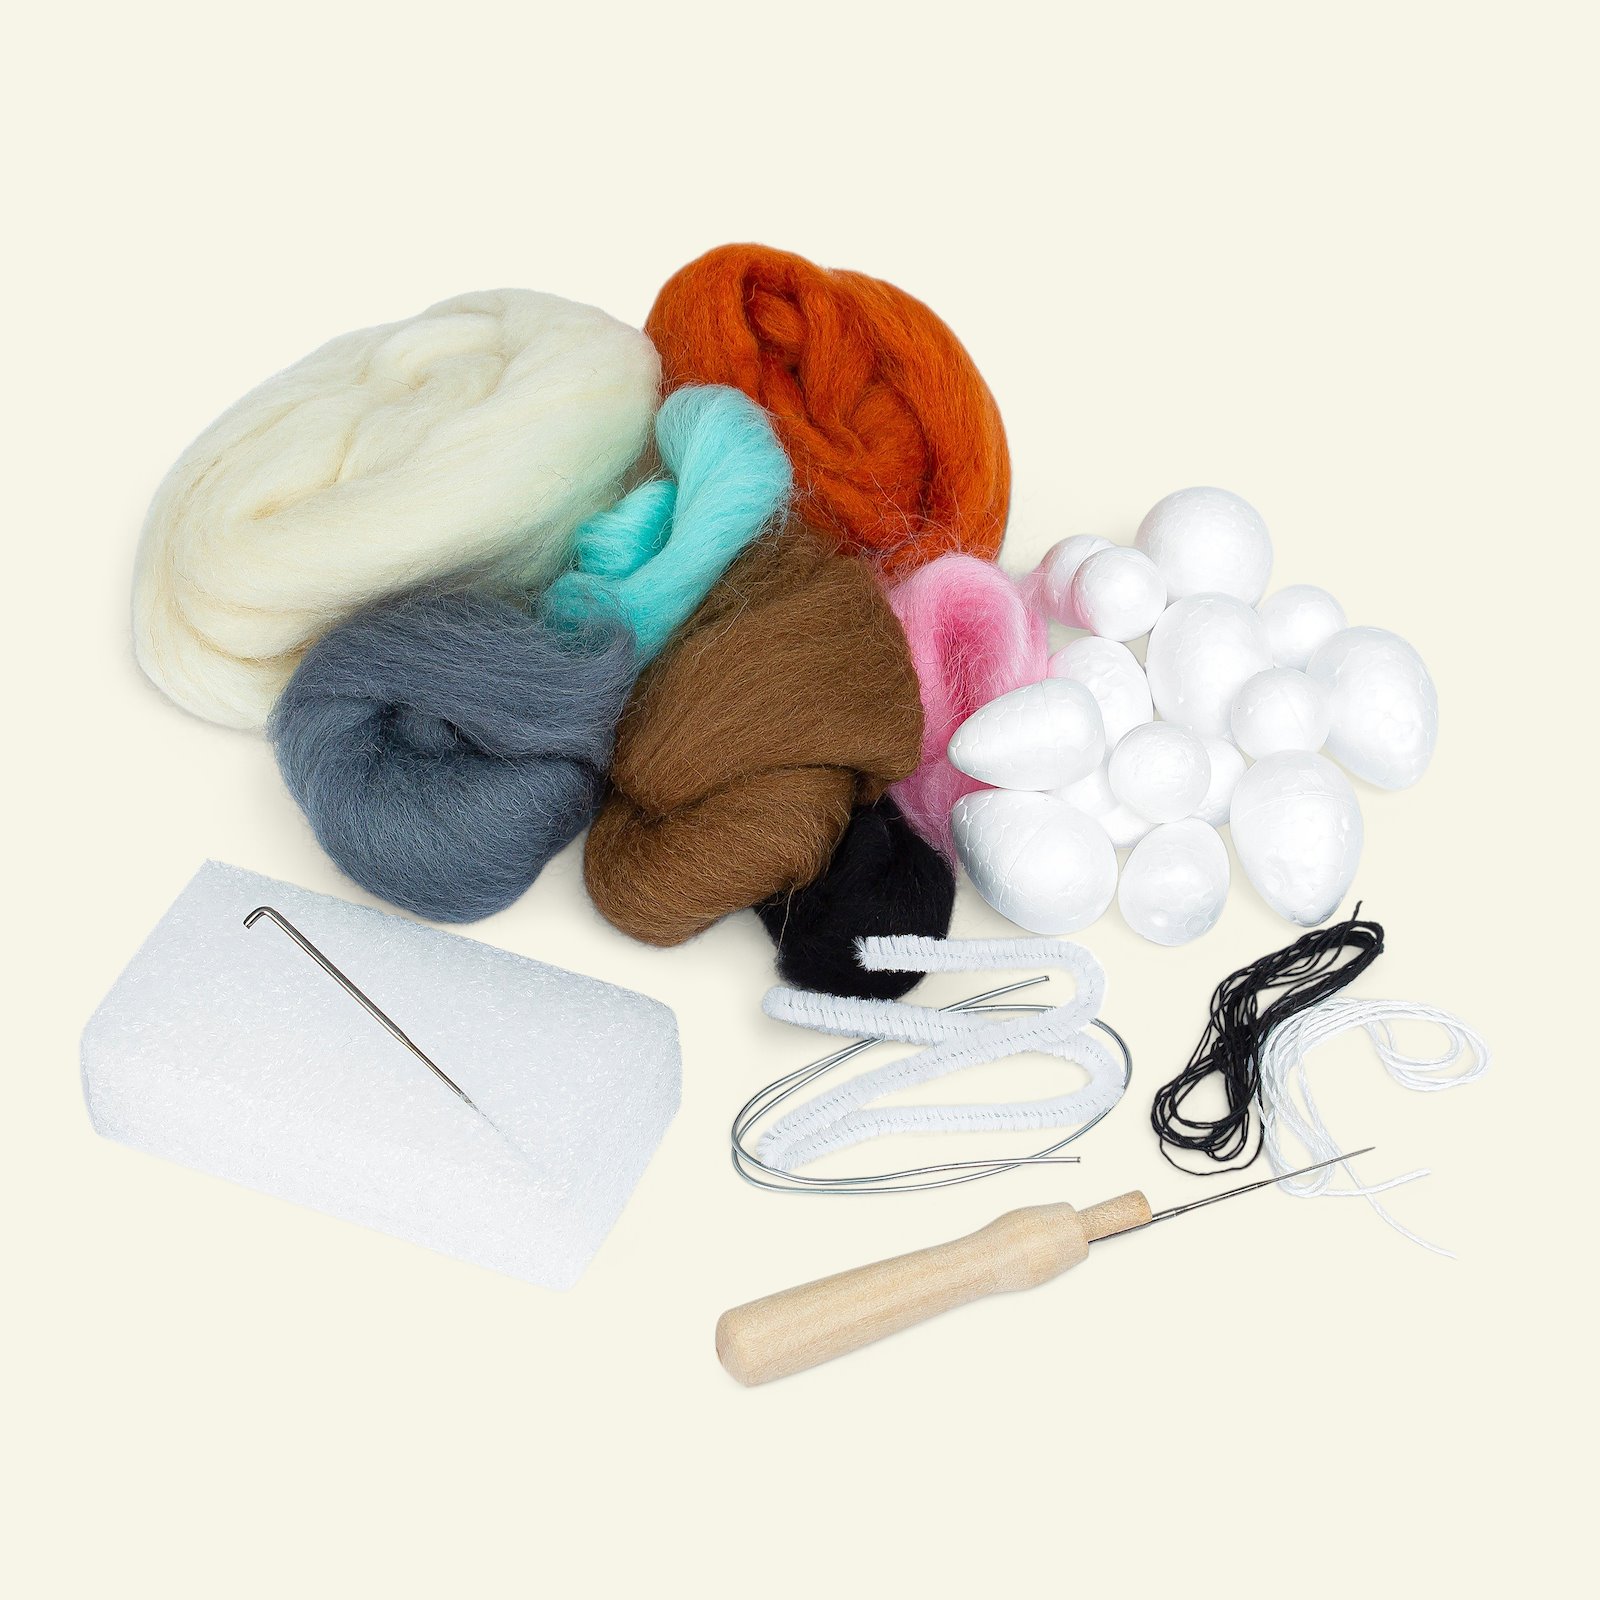 Kit wool 4 animals and balls 1pc 93782_pack_b